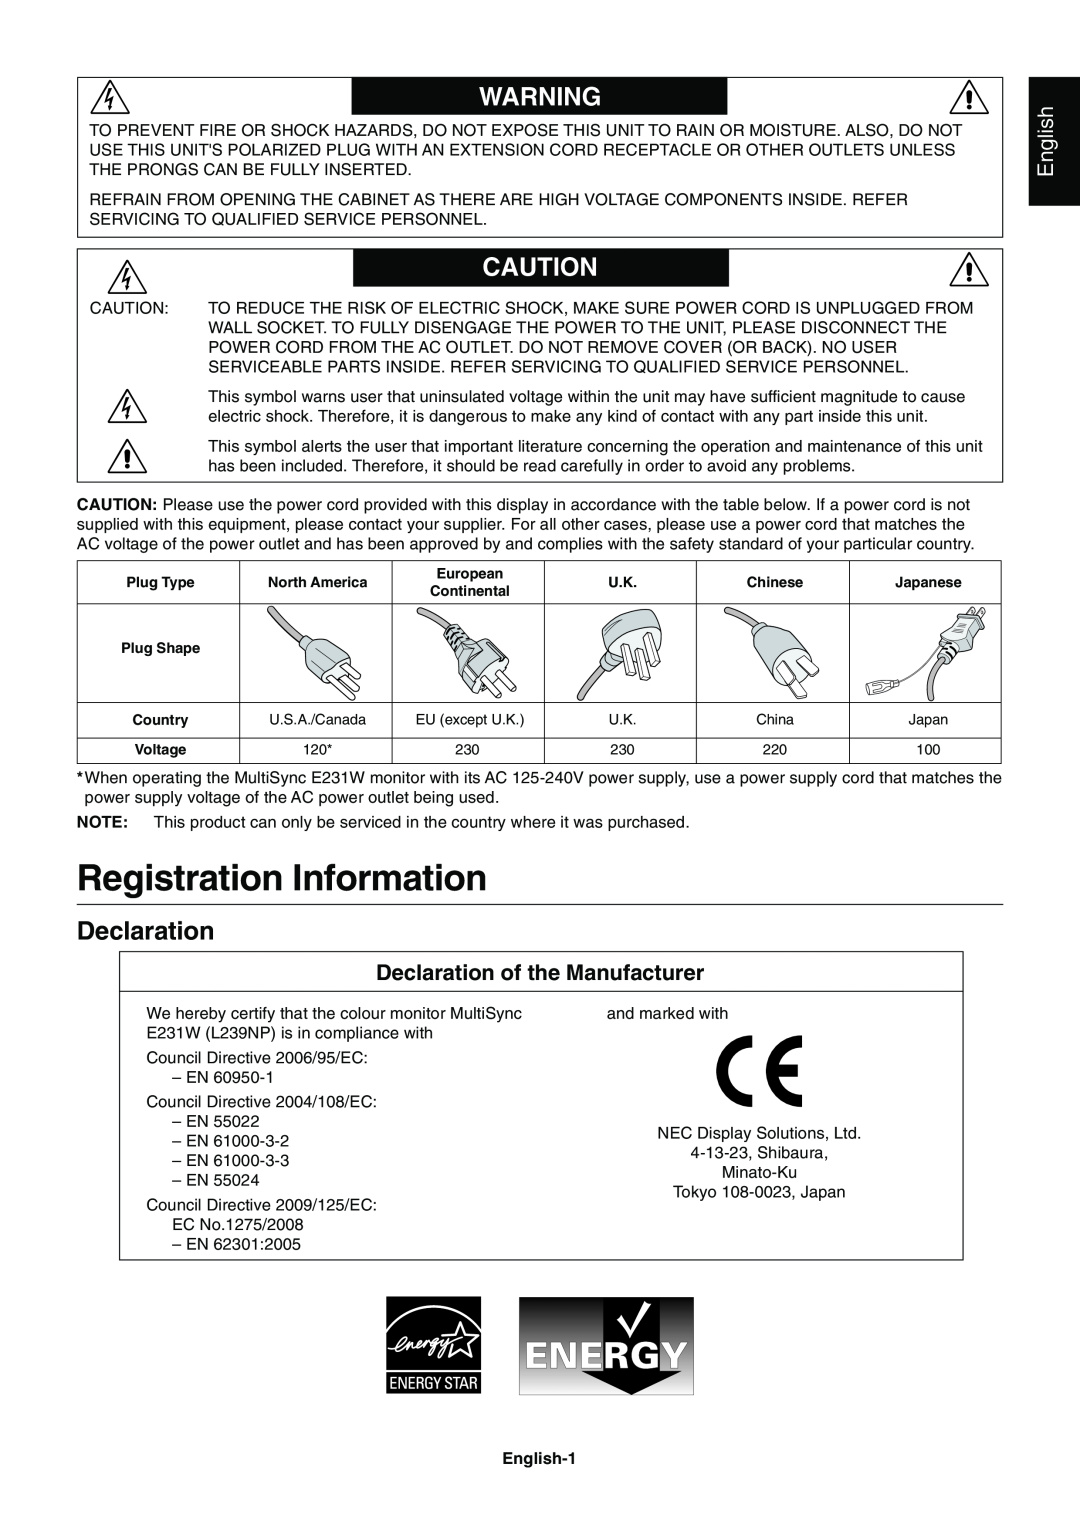 NEC E231W-BK user manual Registration Information, Declaration of the Manufacturer, English 